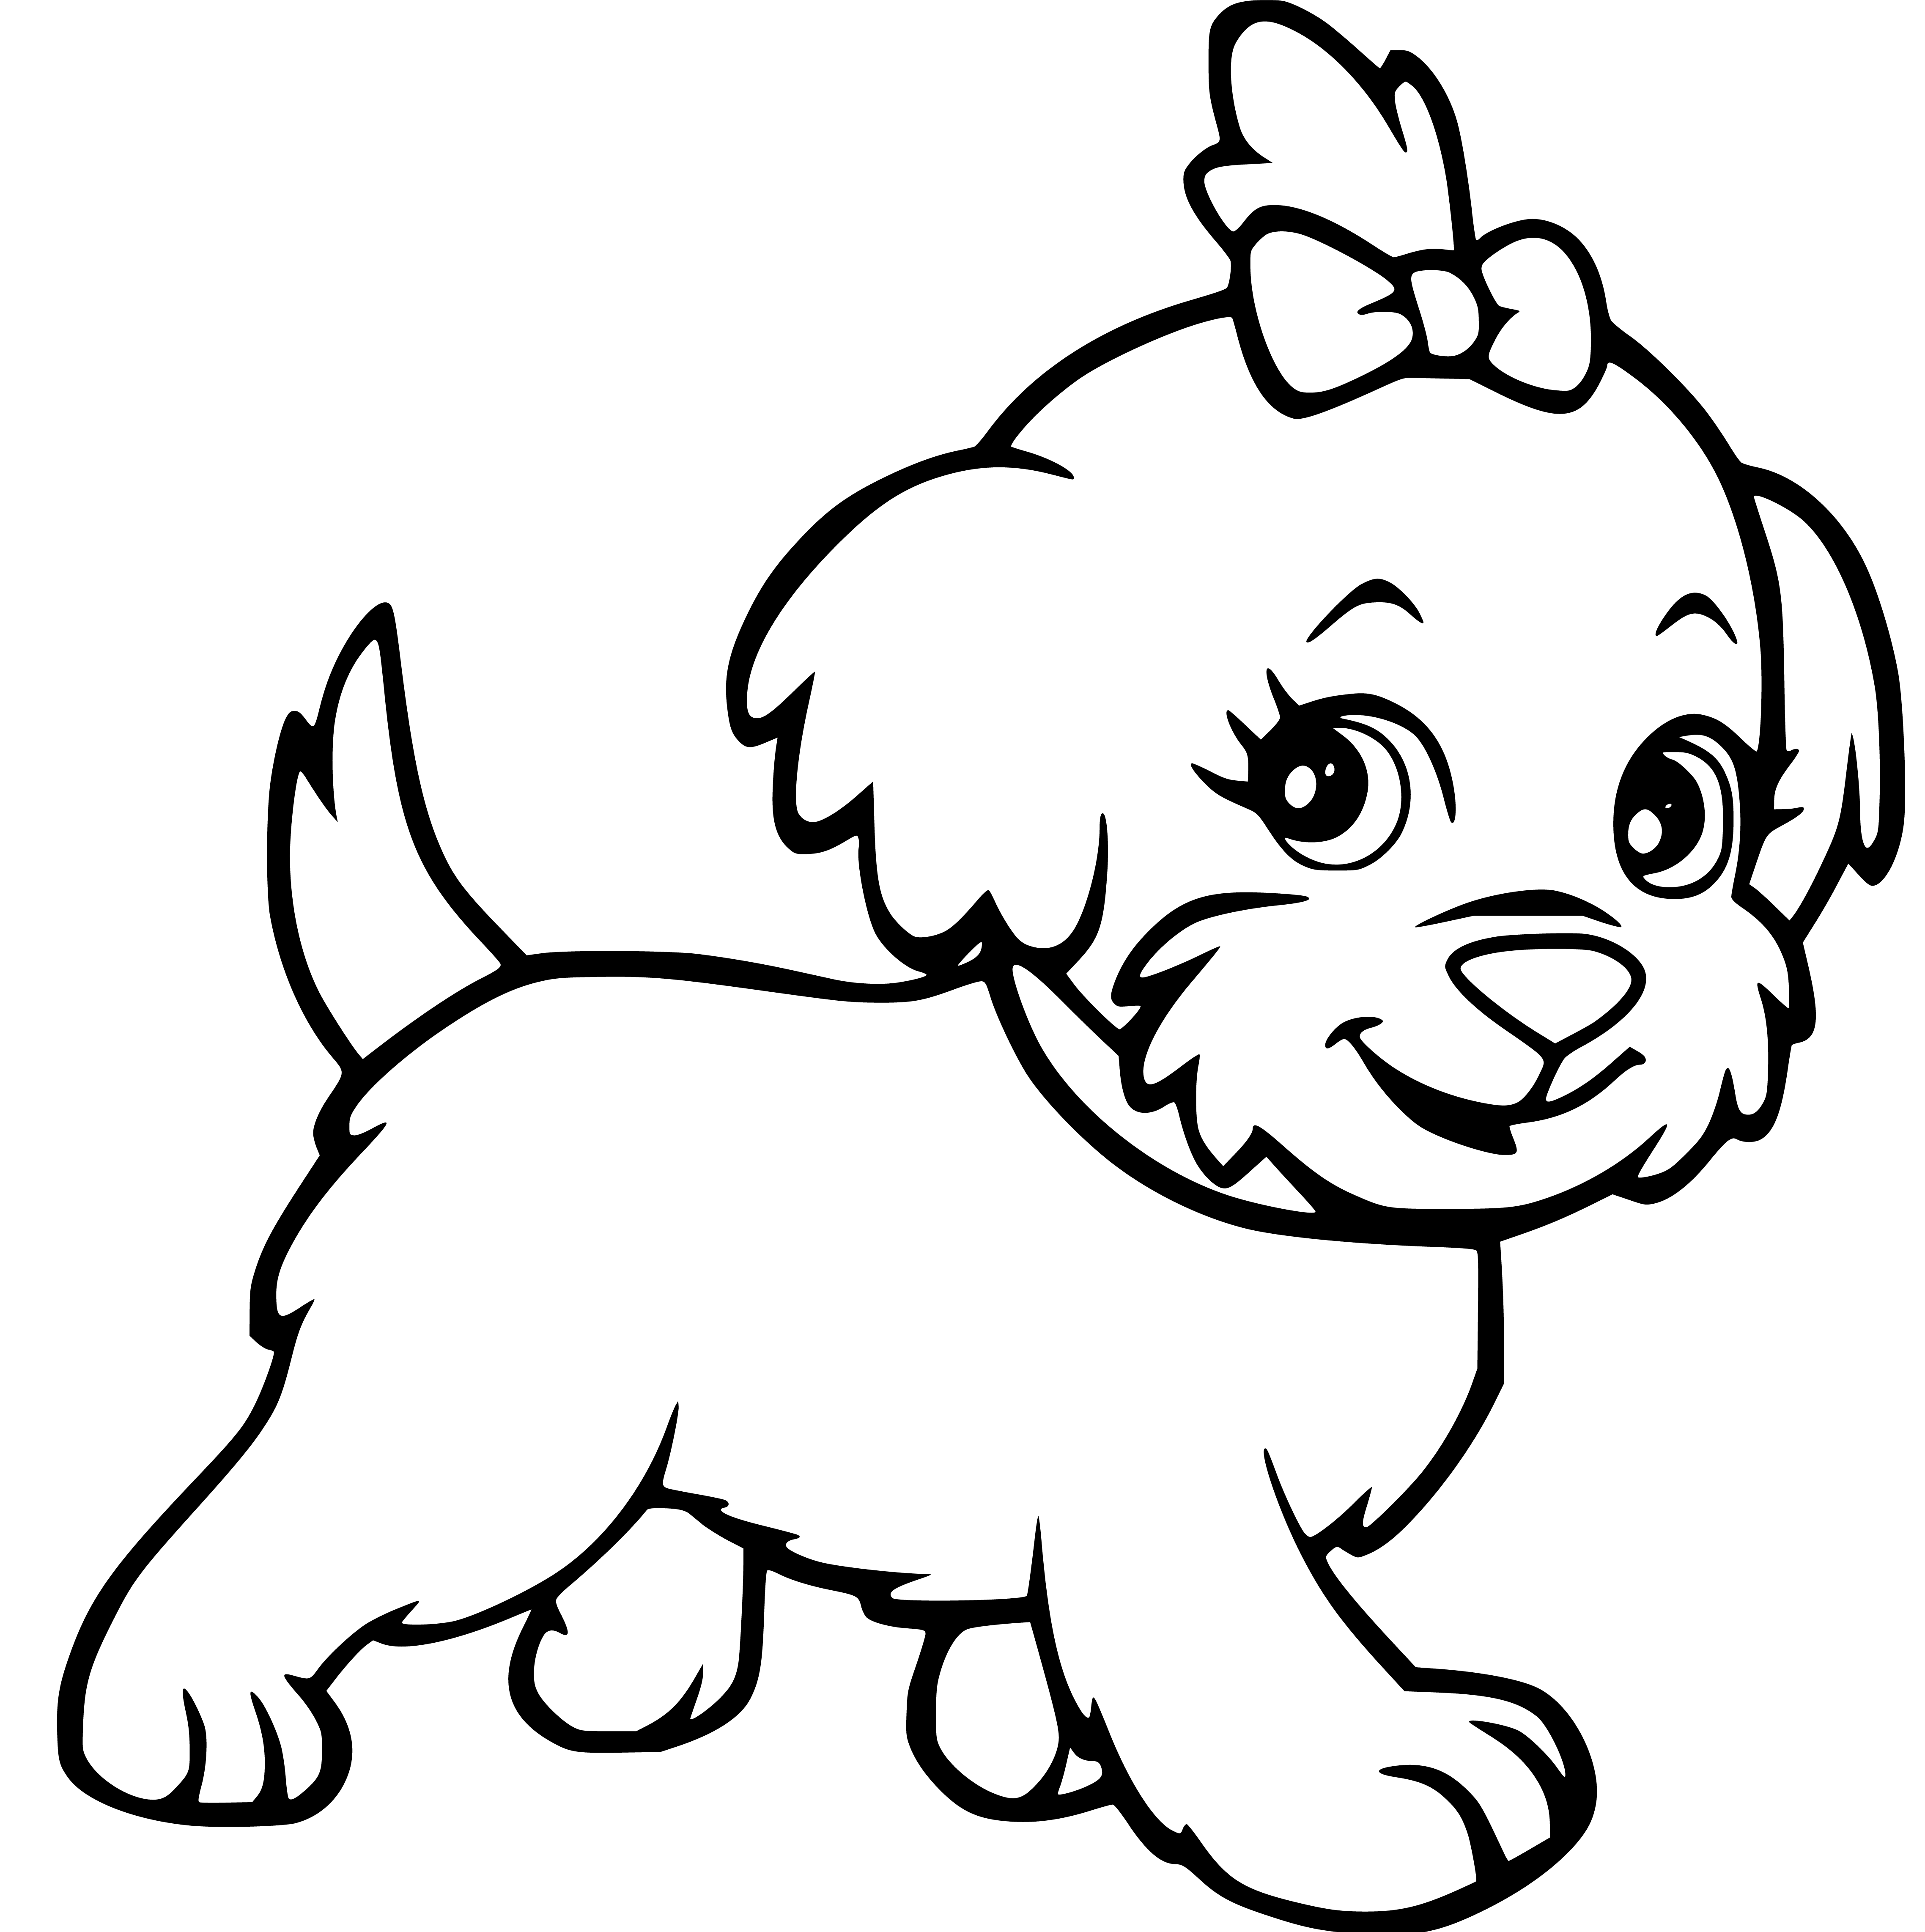 Cute Little Puppy Coloring Page for Children - SheetalColor.com